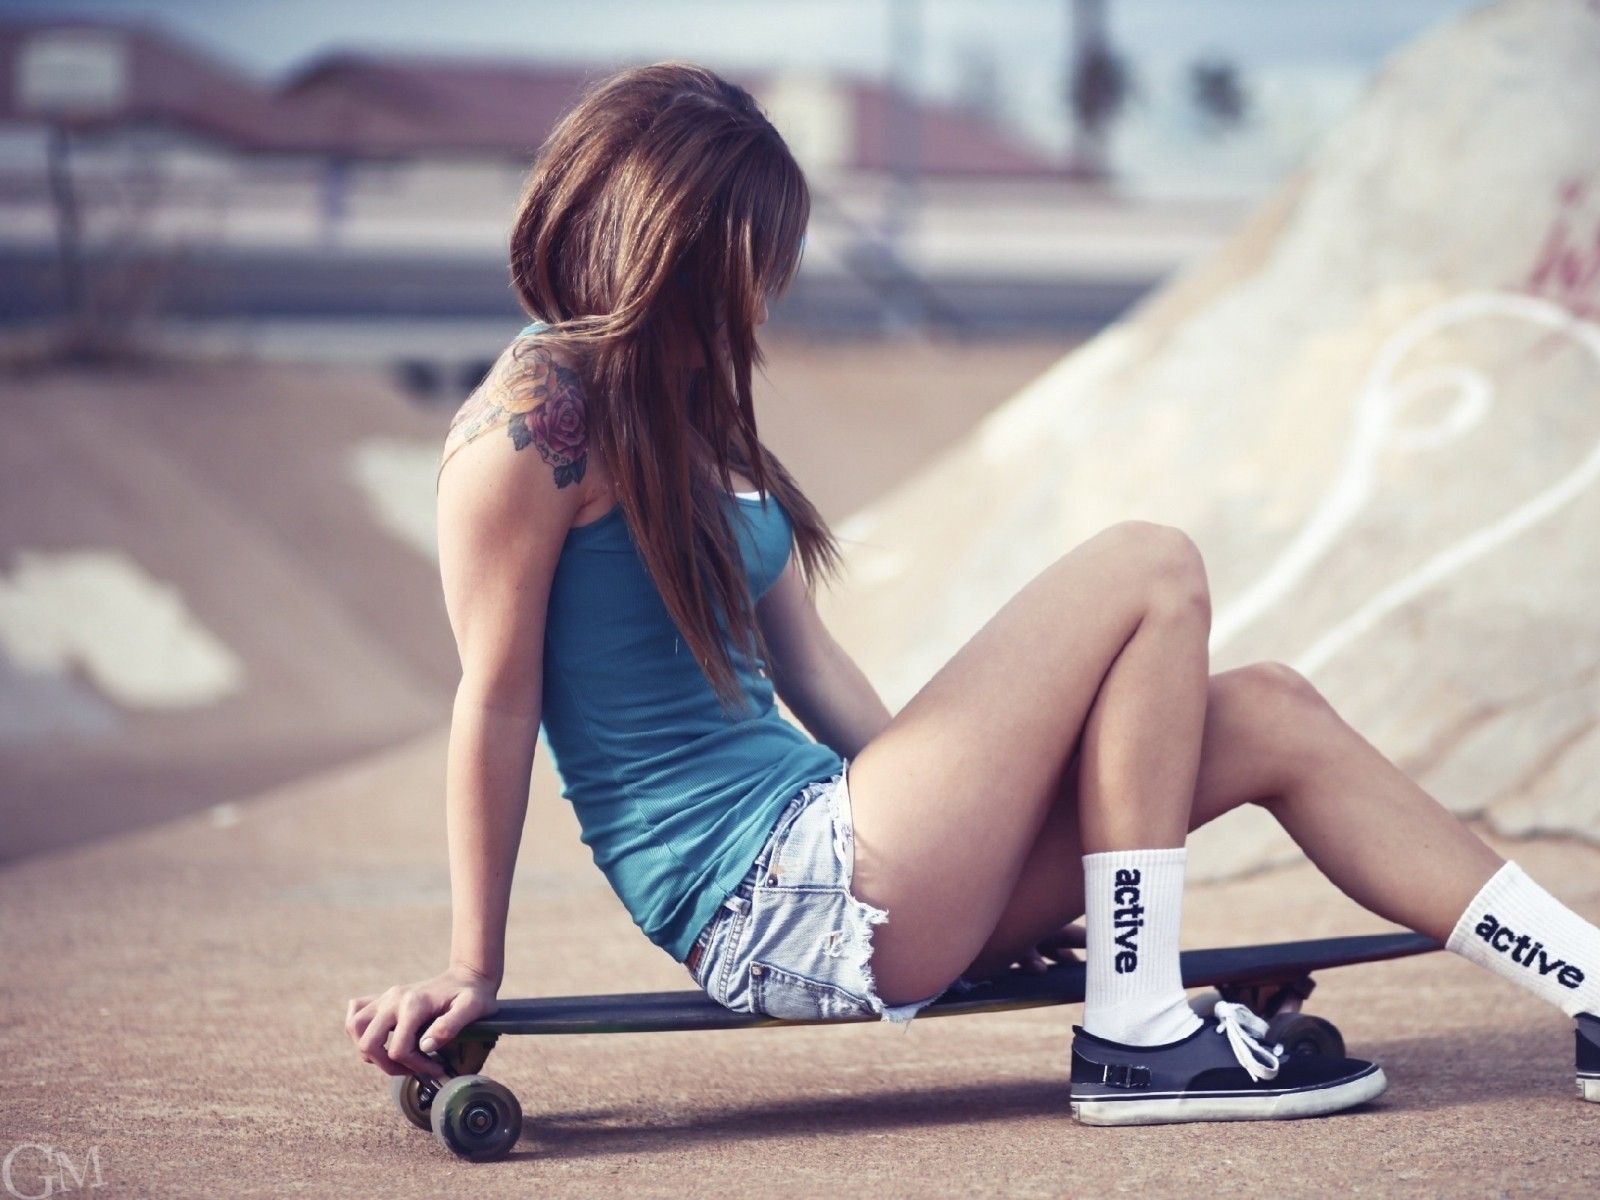 Hottest Female Skateboarders